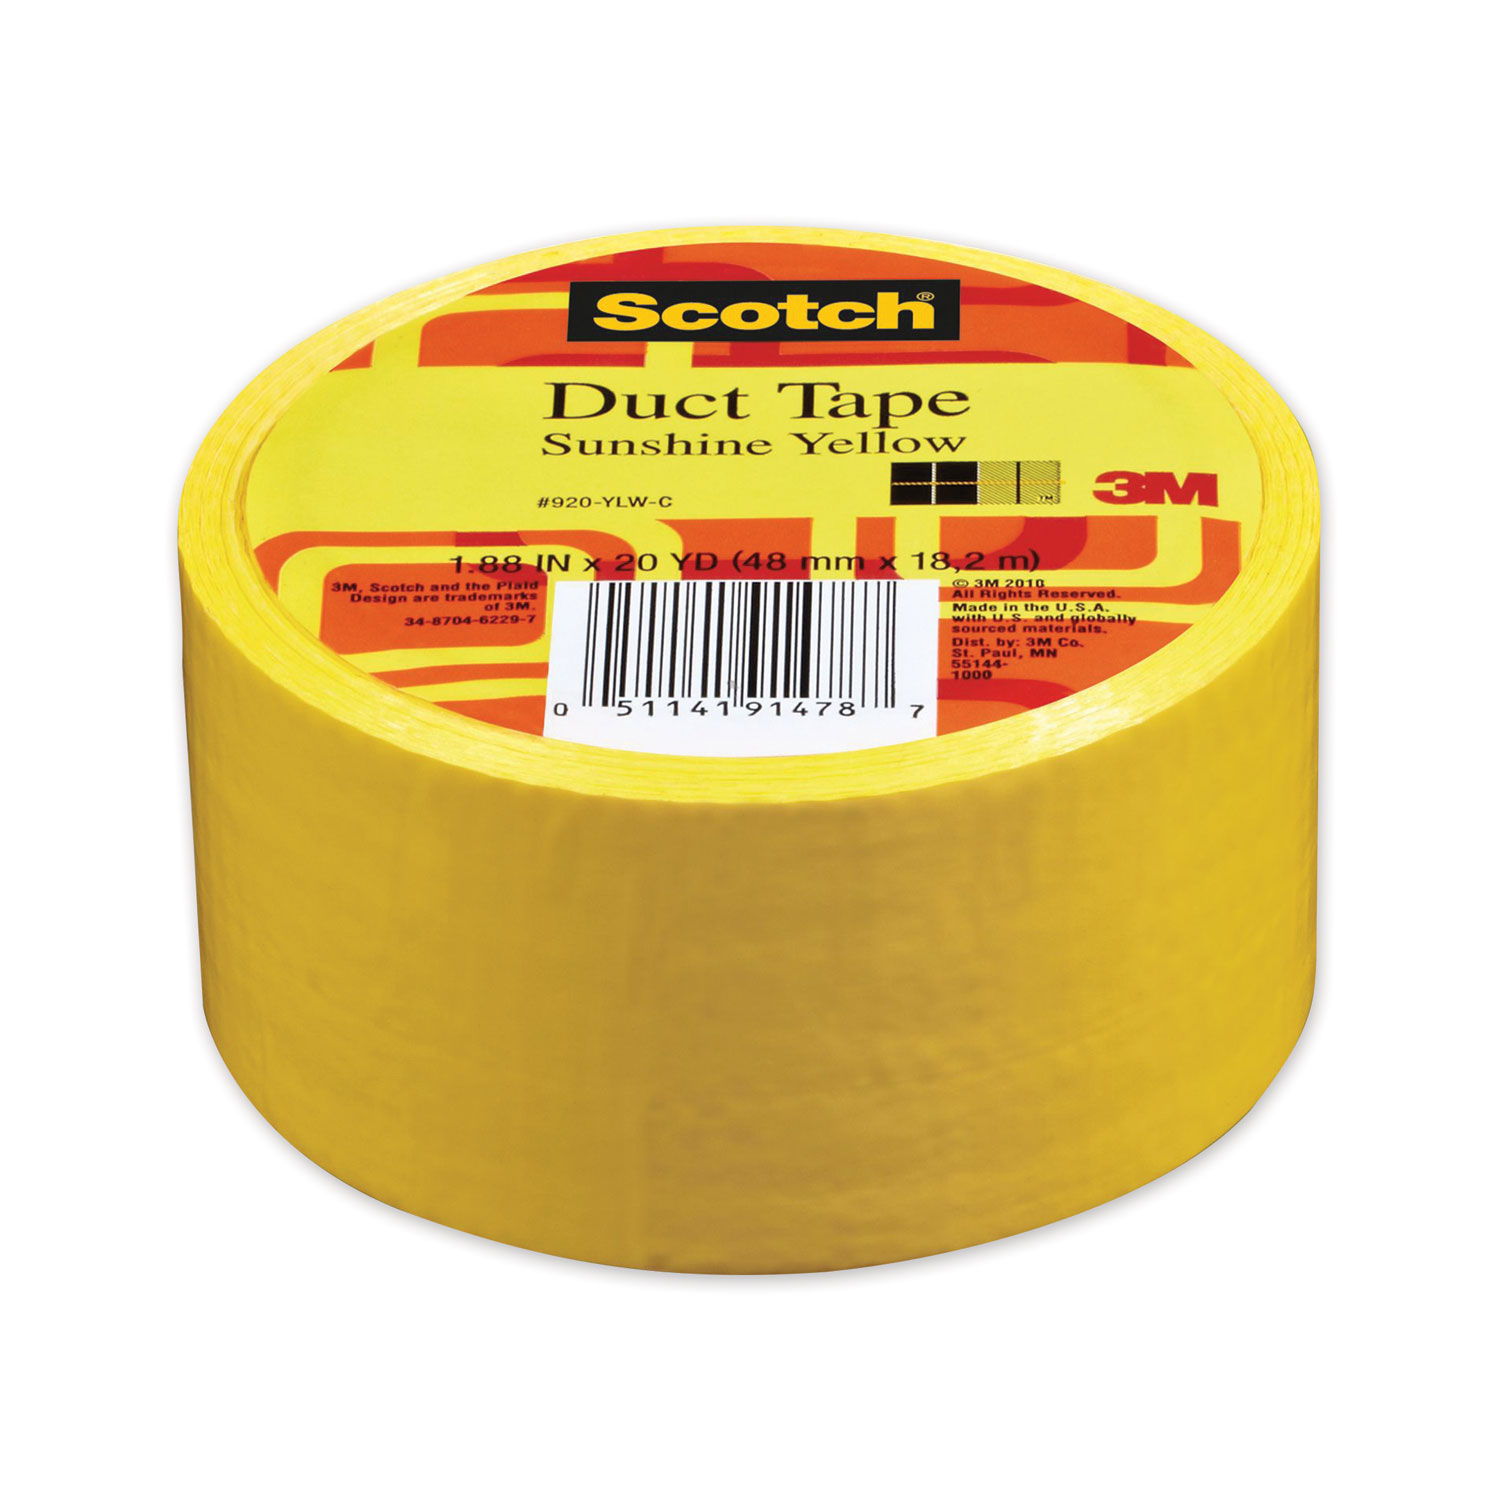  Scotch 920-YLW-C Duct Tape, 1.88 x 20 yds, Sunshine Yellow (MMM70005058196) 